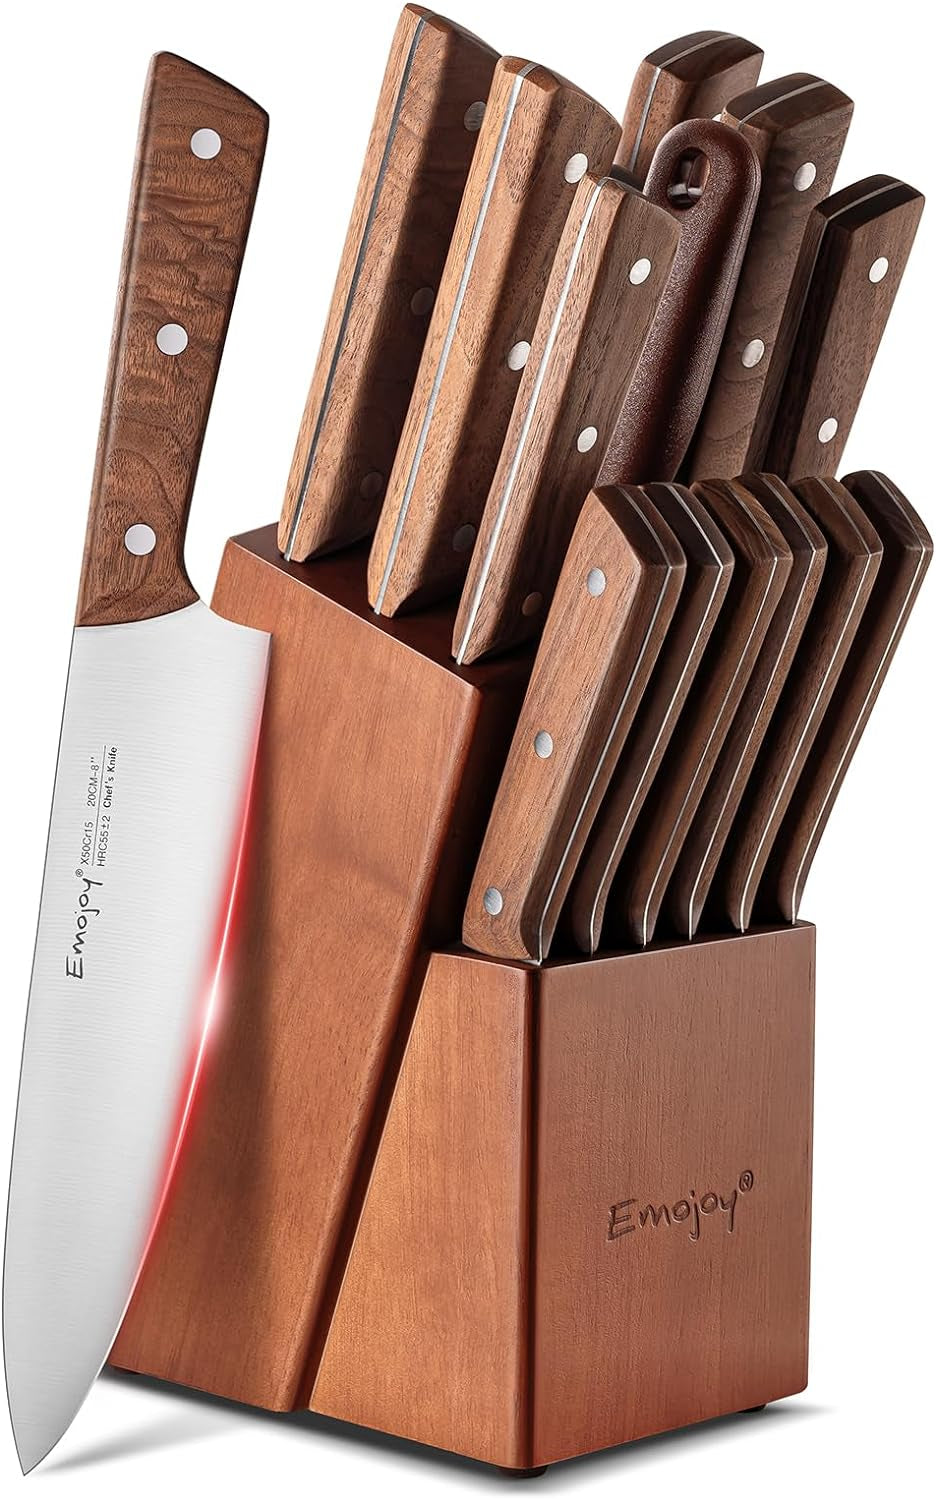  Emojoy Knife Set with Block, 15 Pieces Kitchen Knife